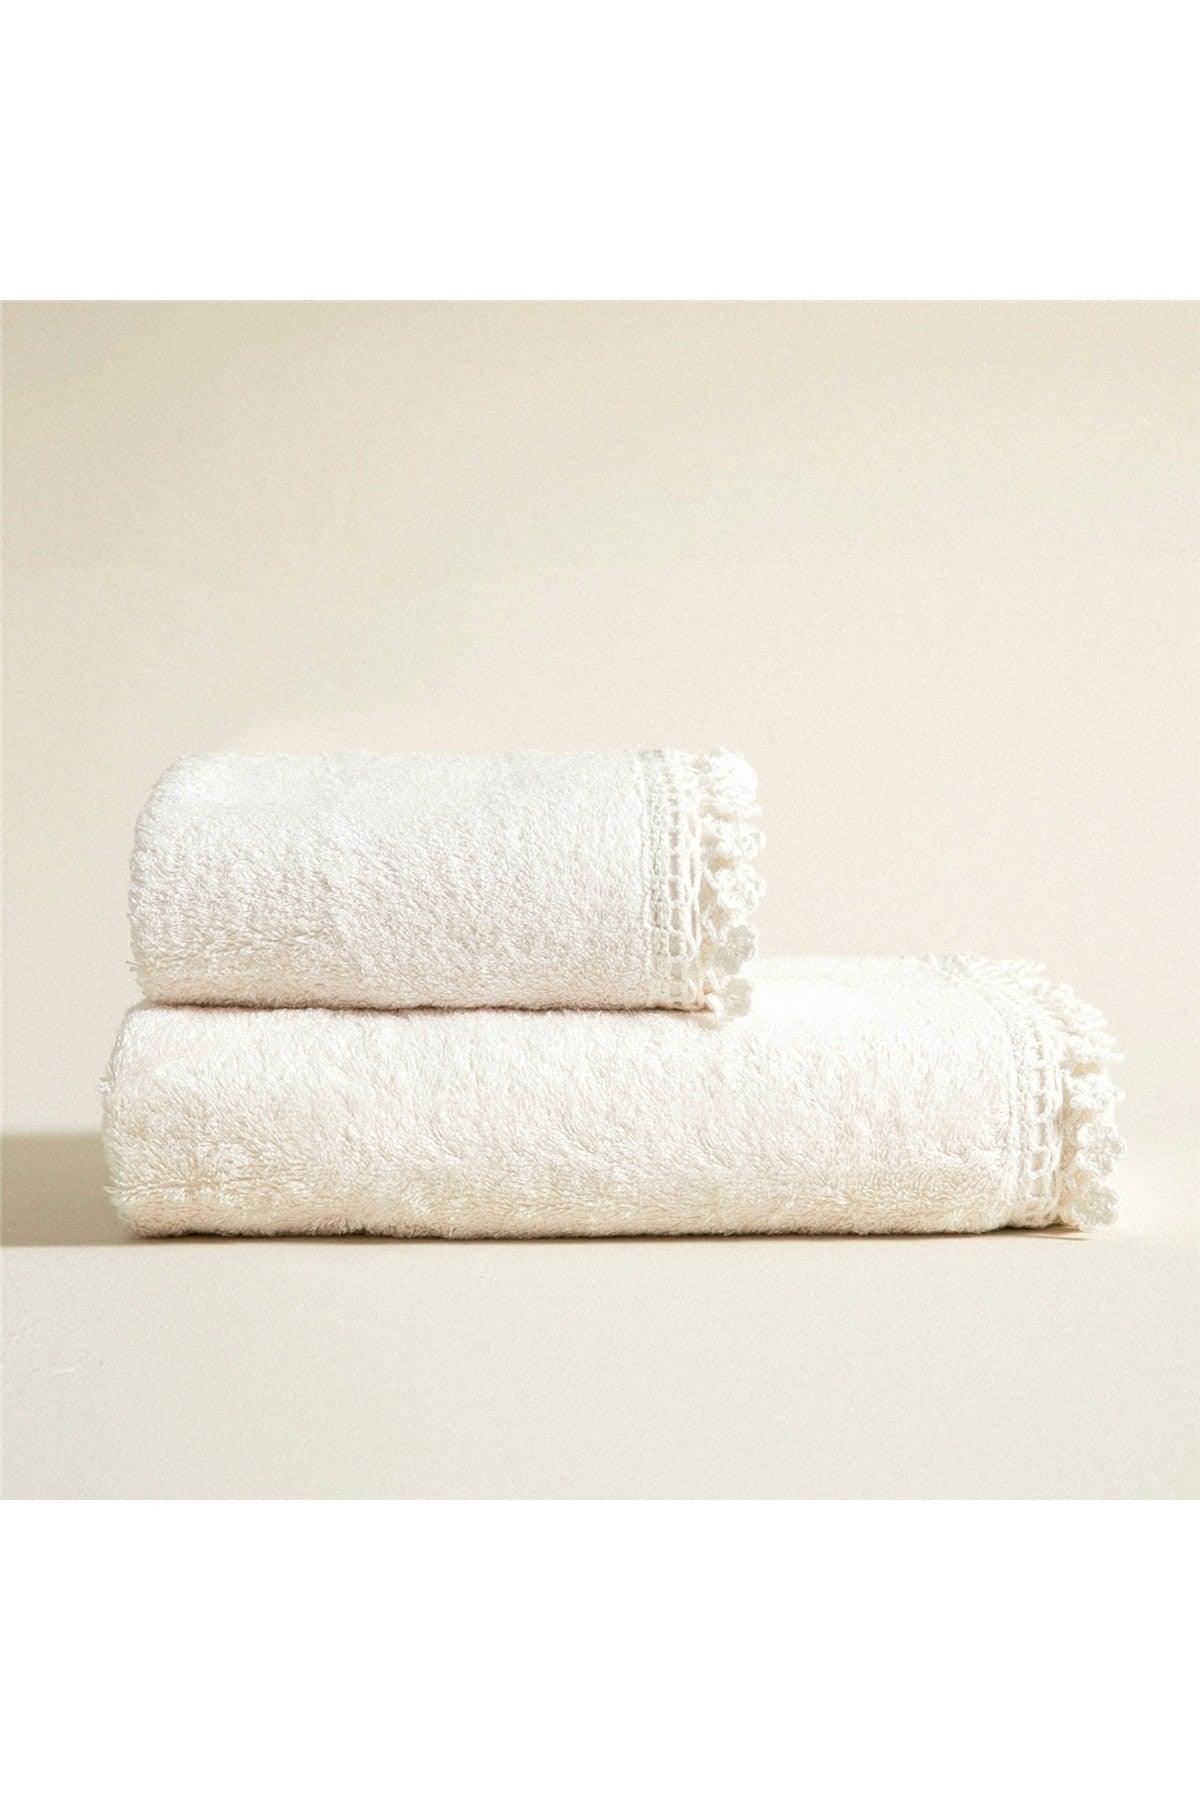 Madre Hand Towel 30x50 Cm Ecru - Swordslife